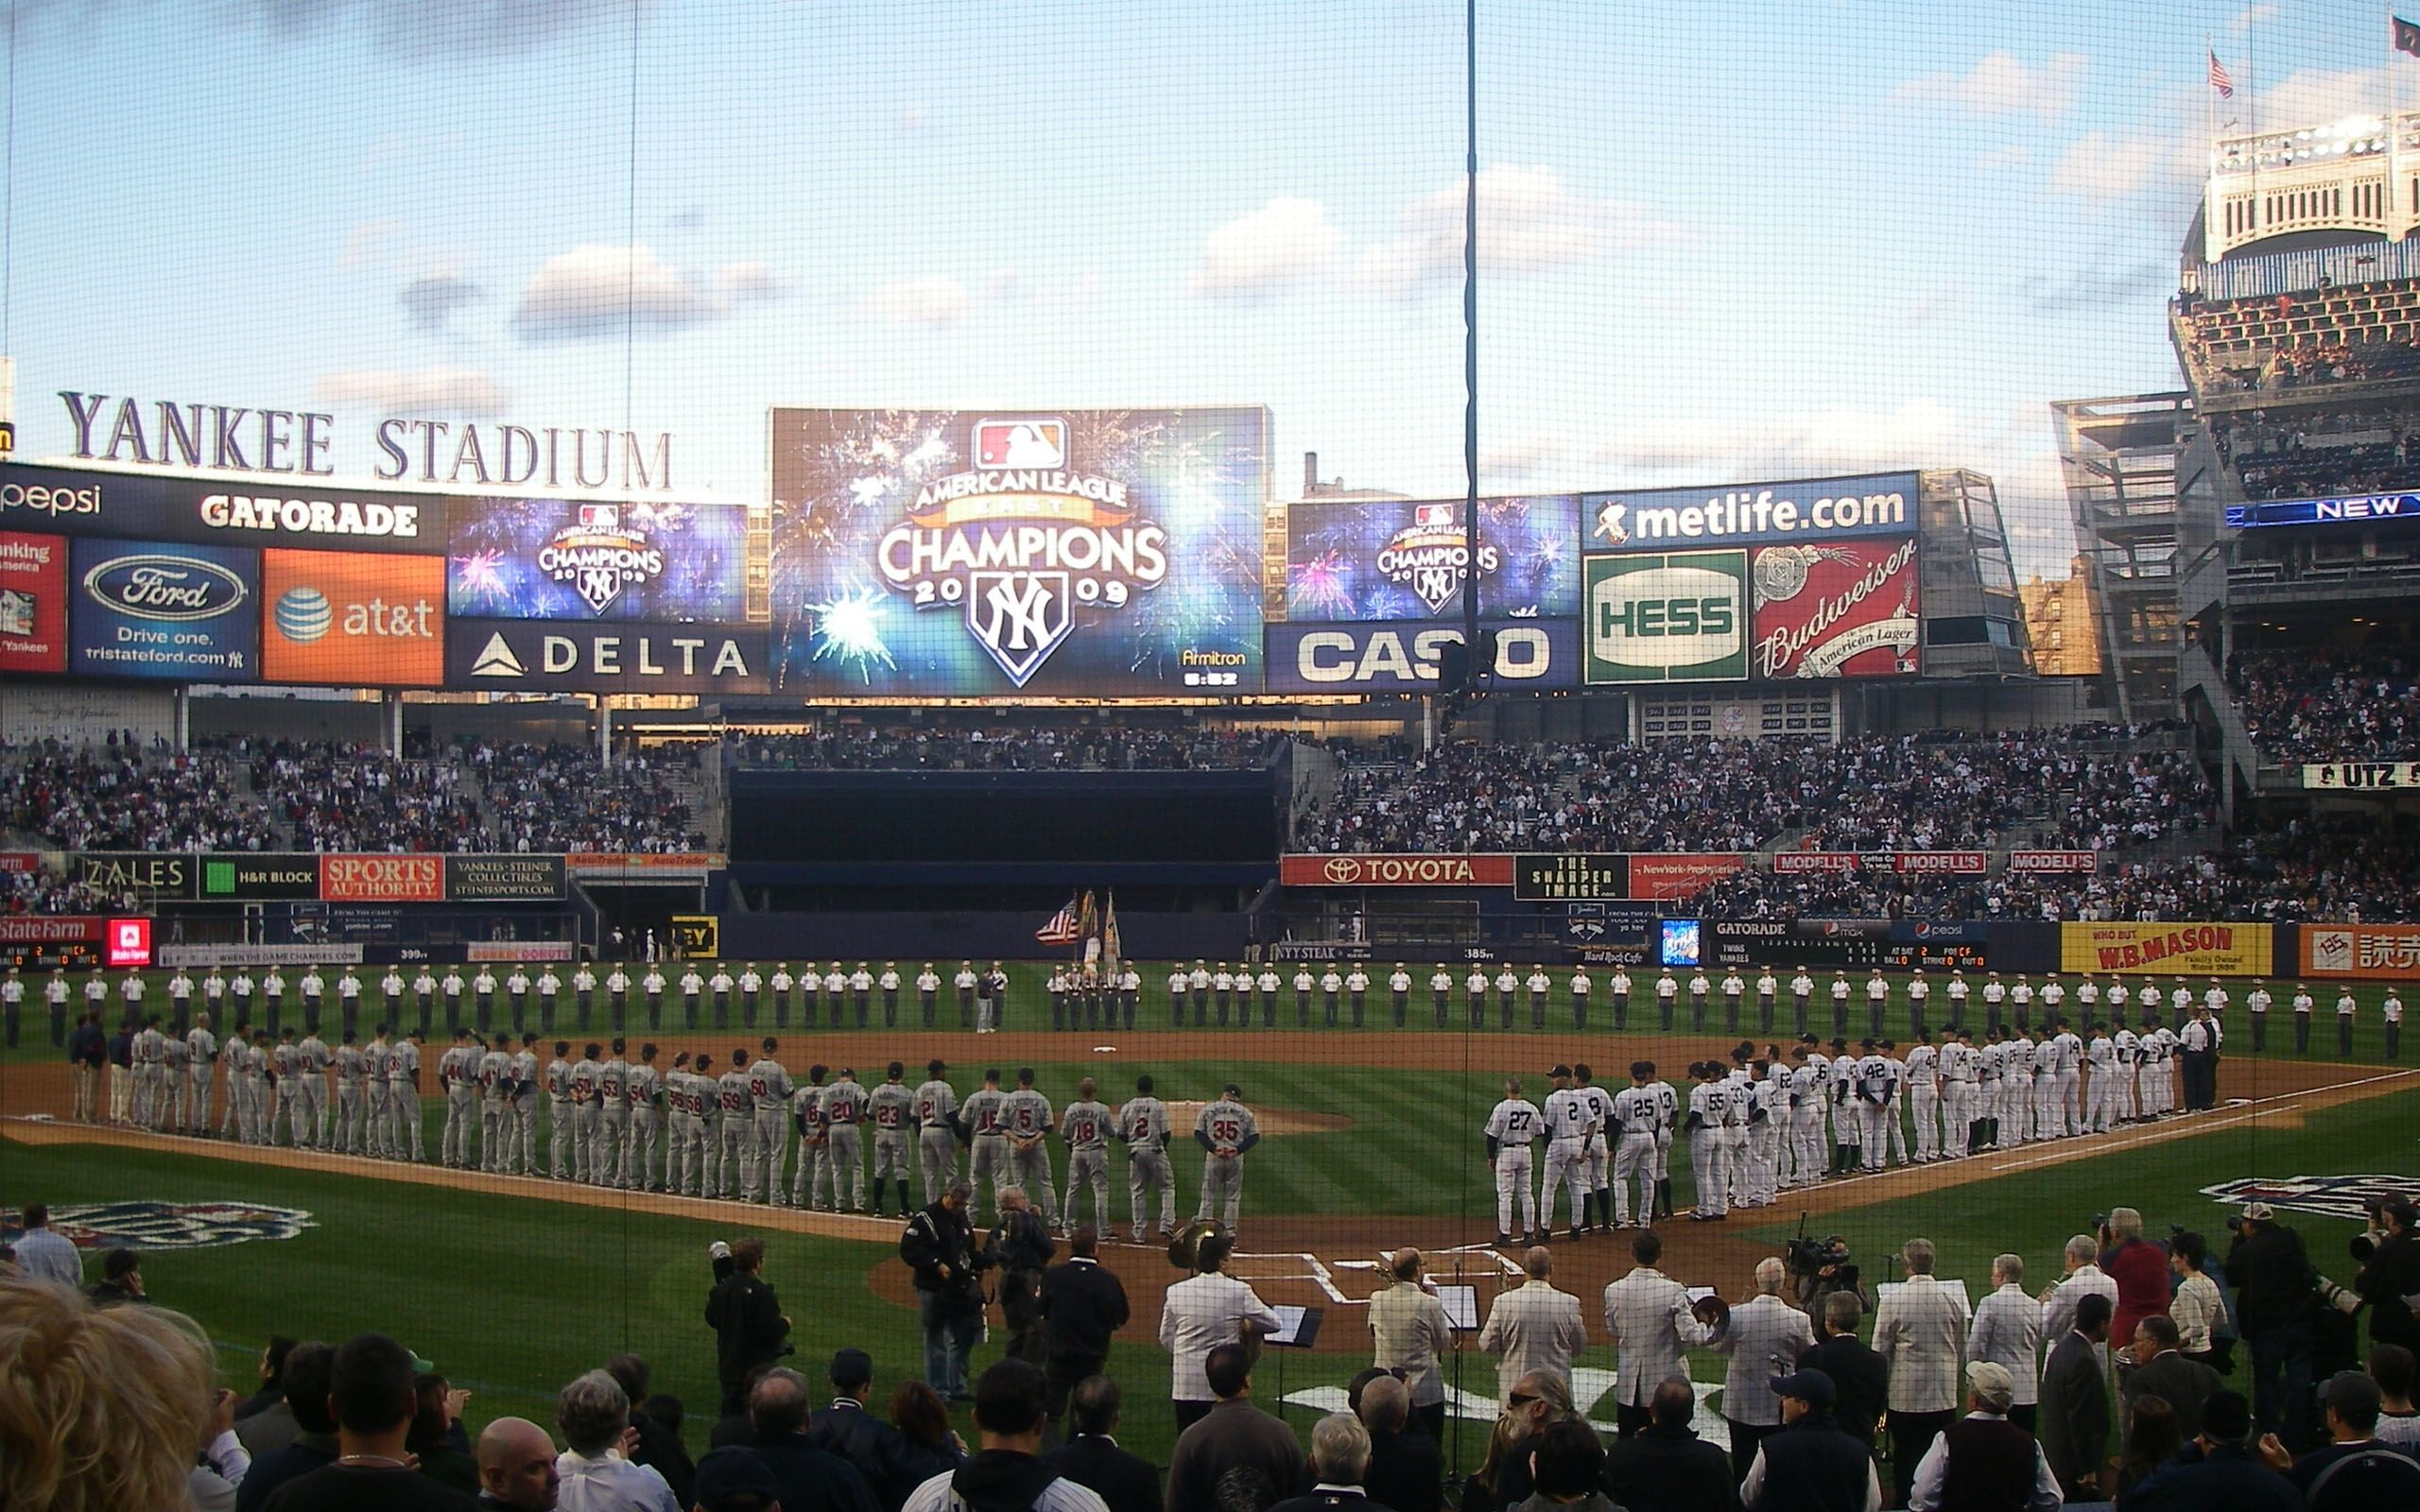 2560x1600 Picture of Yankee Stadium in HDQ